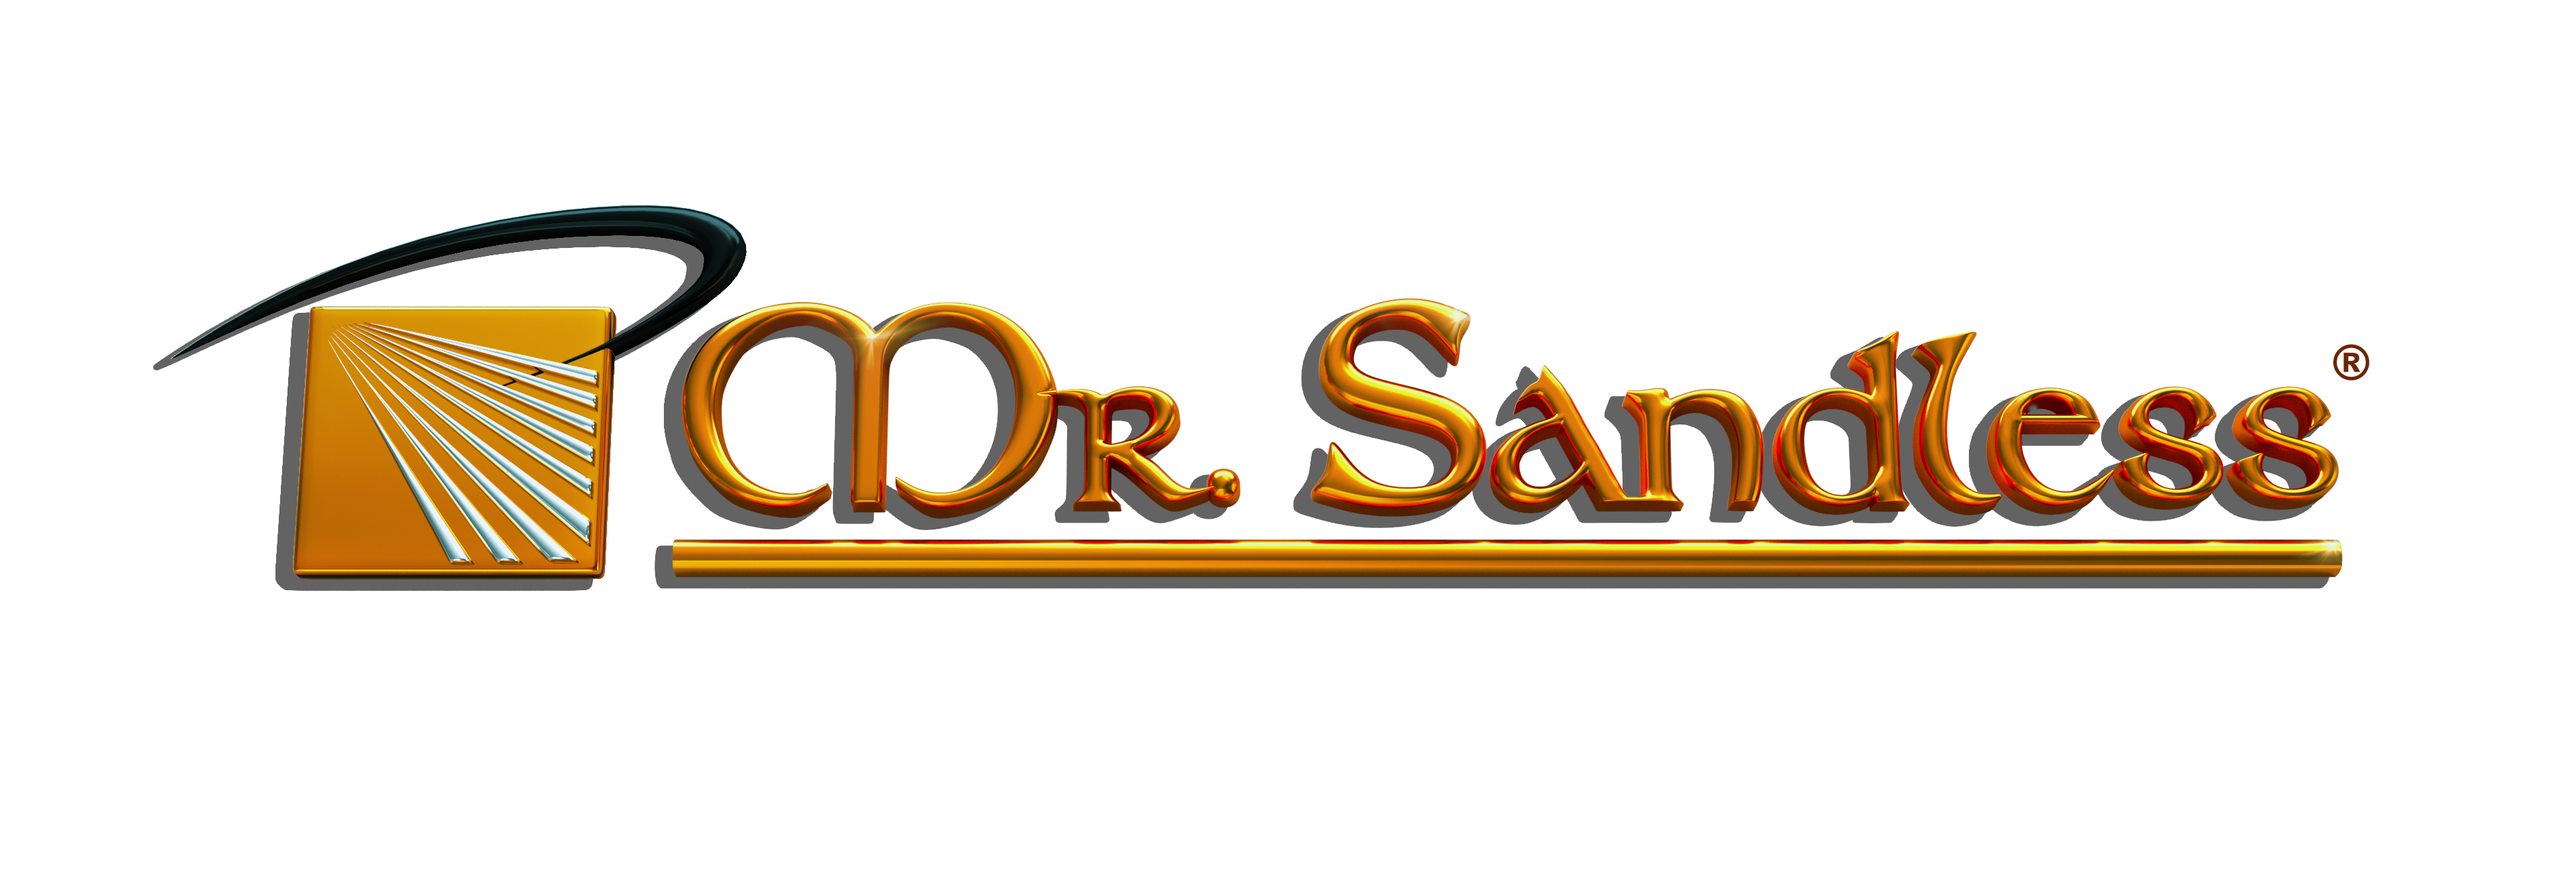 Mr. Sandless of Baton Rouge Logo